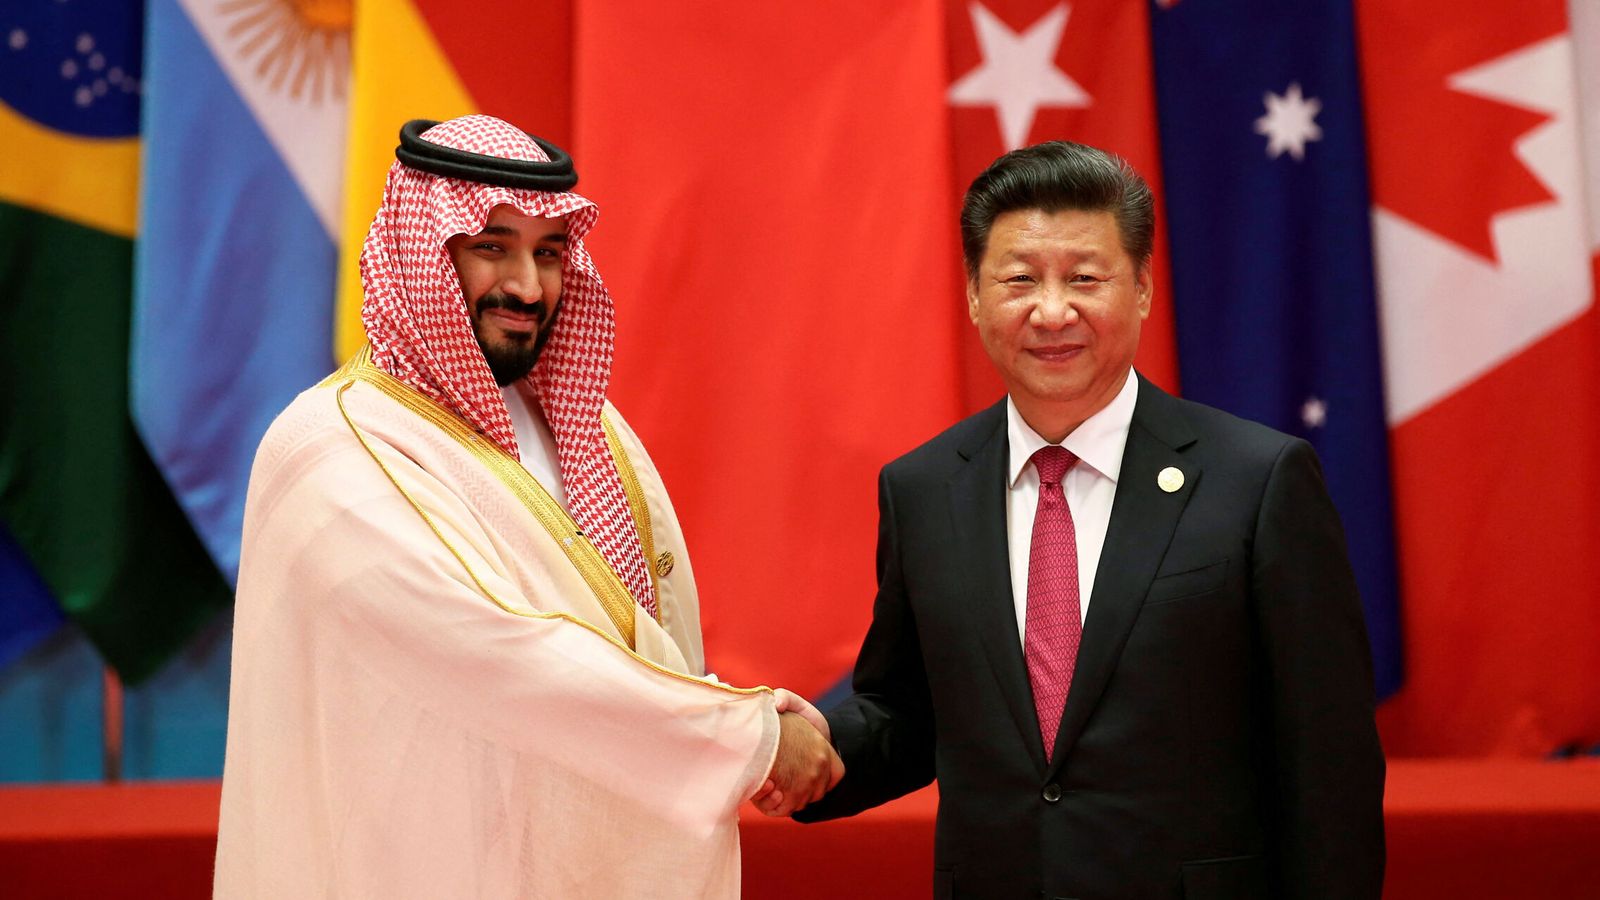 El príncipe heredero de Arabia Saudí, Mohamed bin Salmán, junto a Xi Jinping.